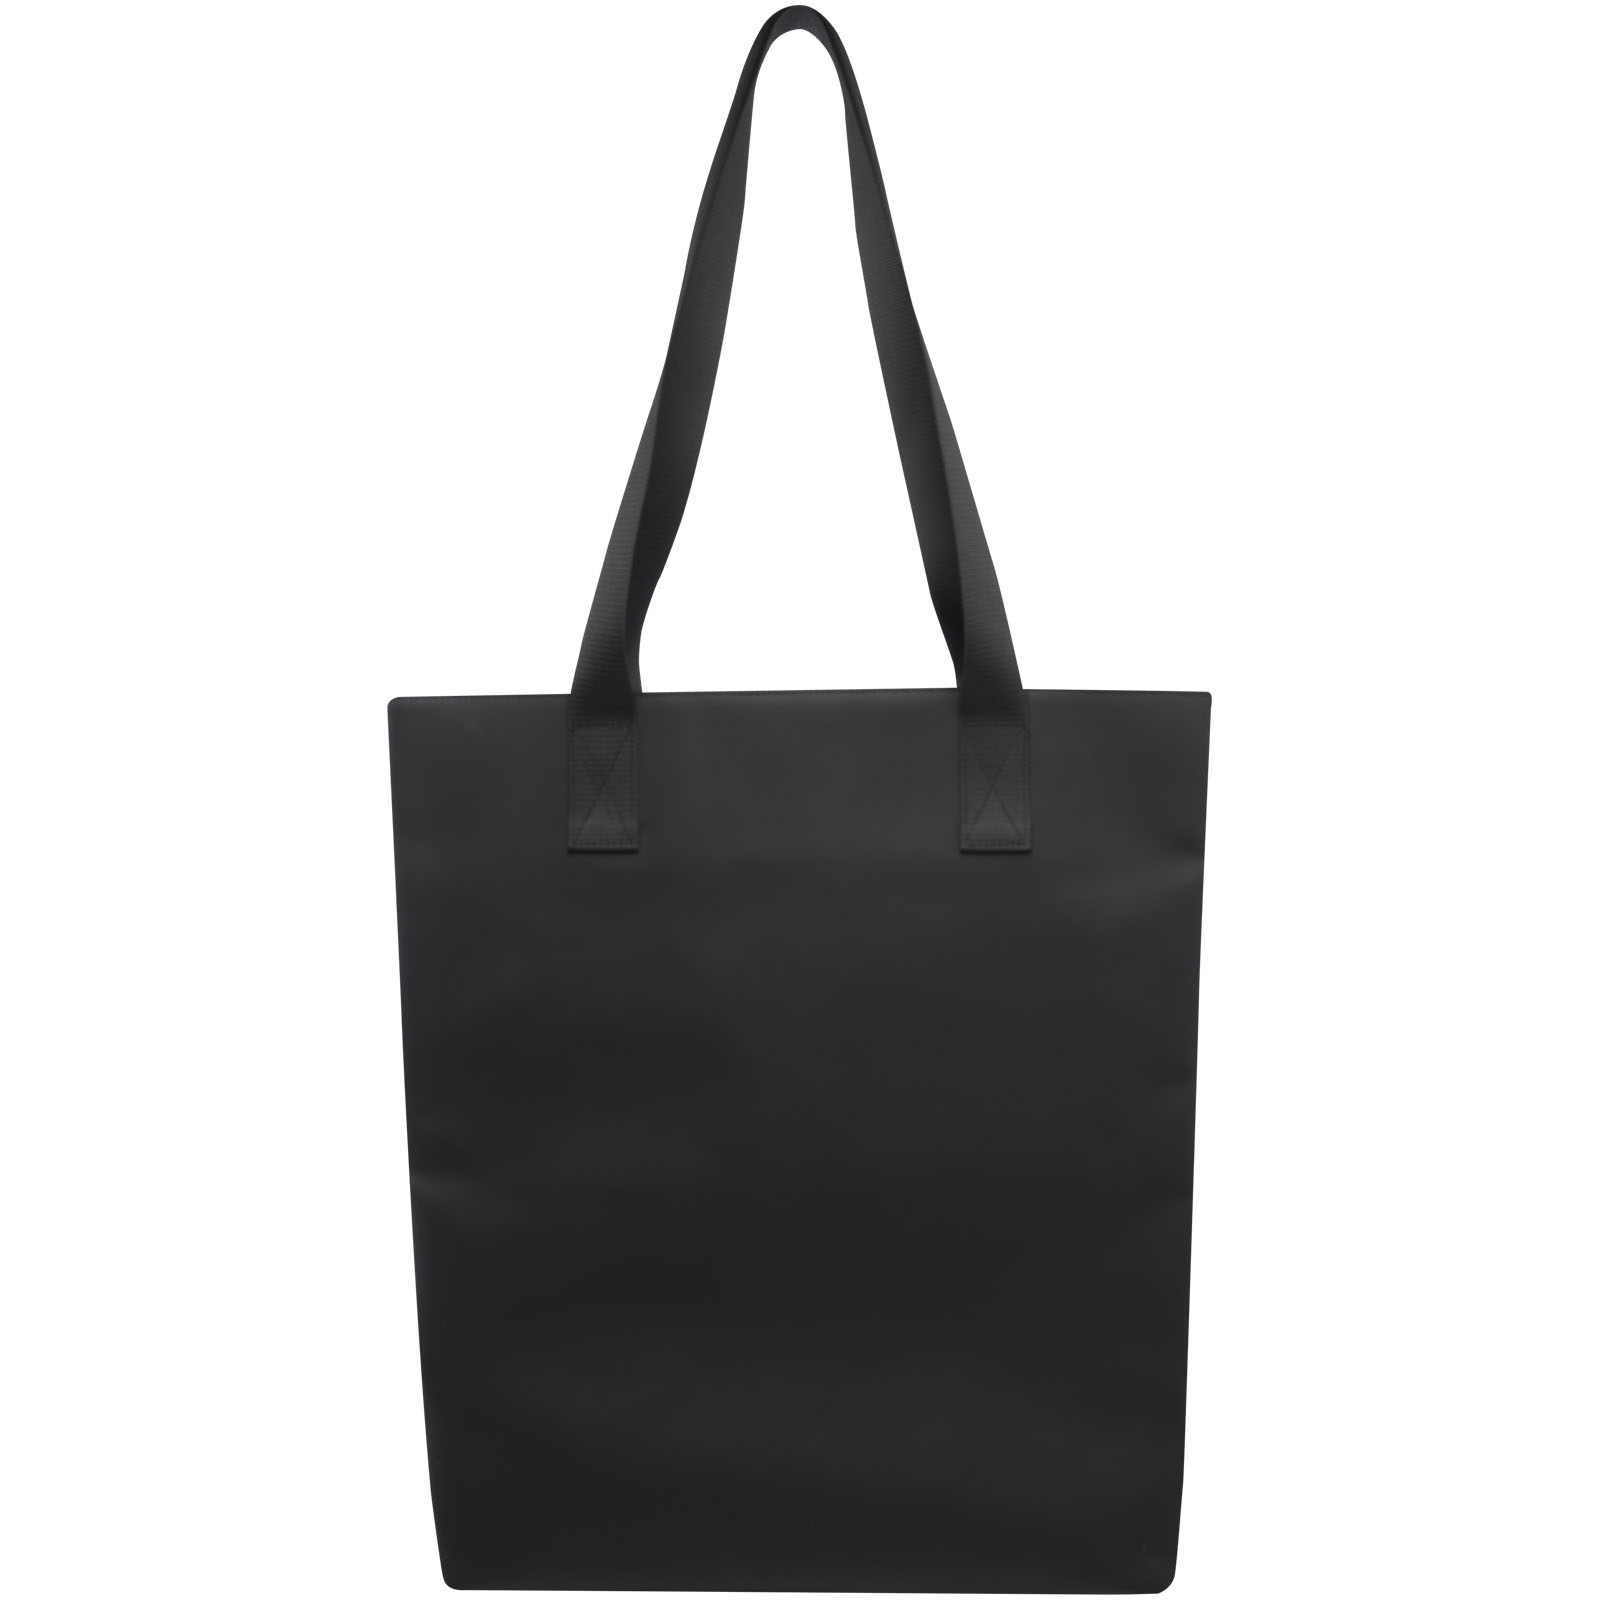 Advertising Shopping & Tote Bags - Turner tote bag - 1